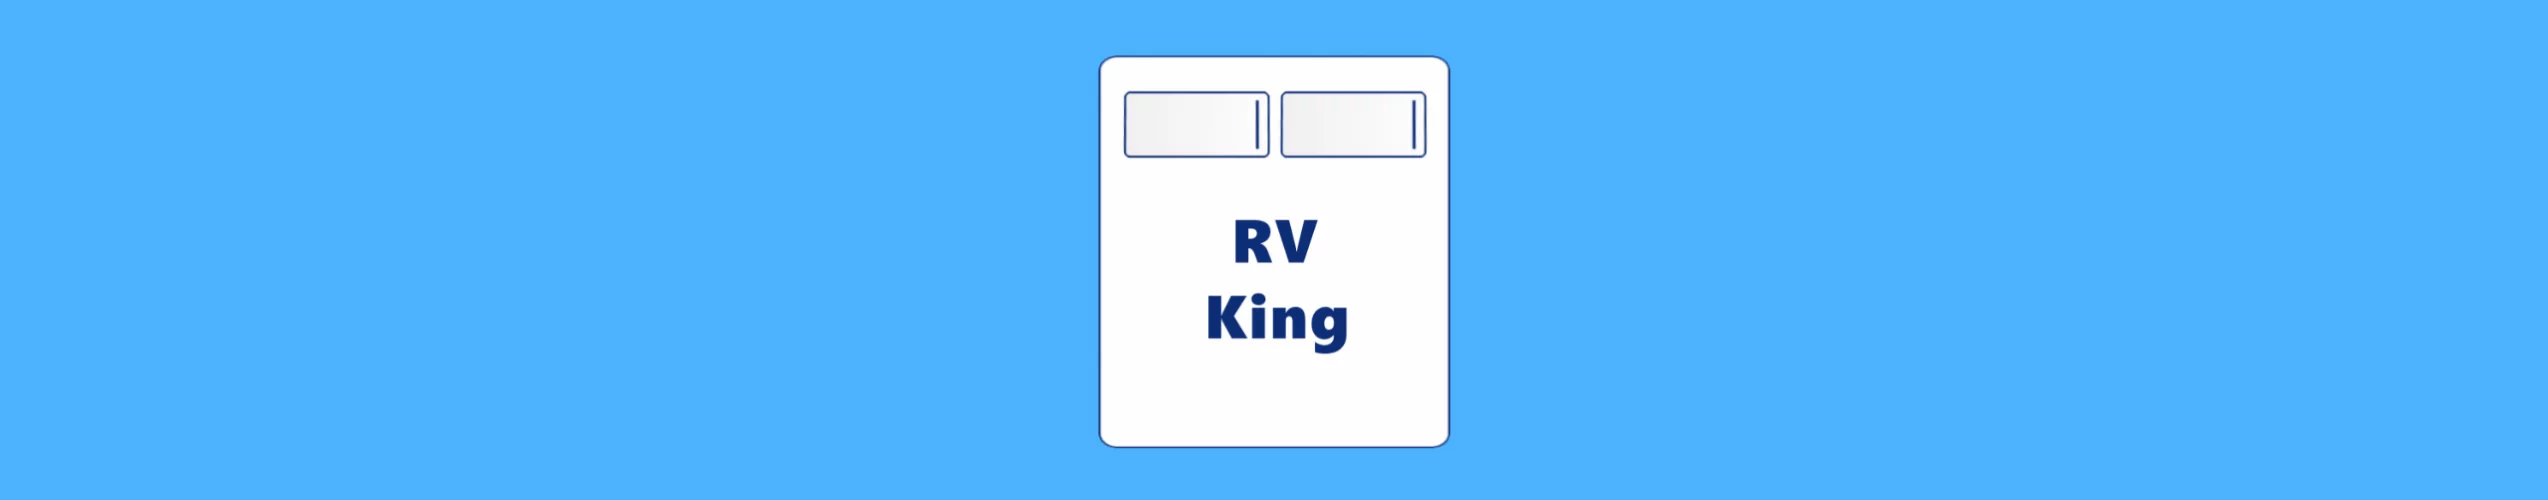 rv king mattress size